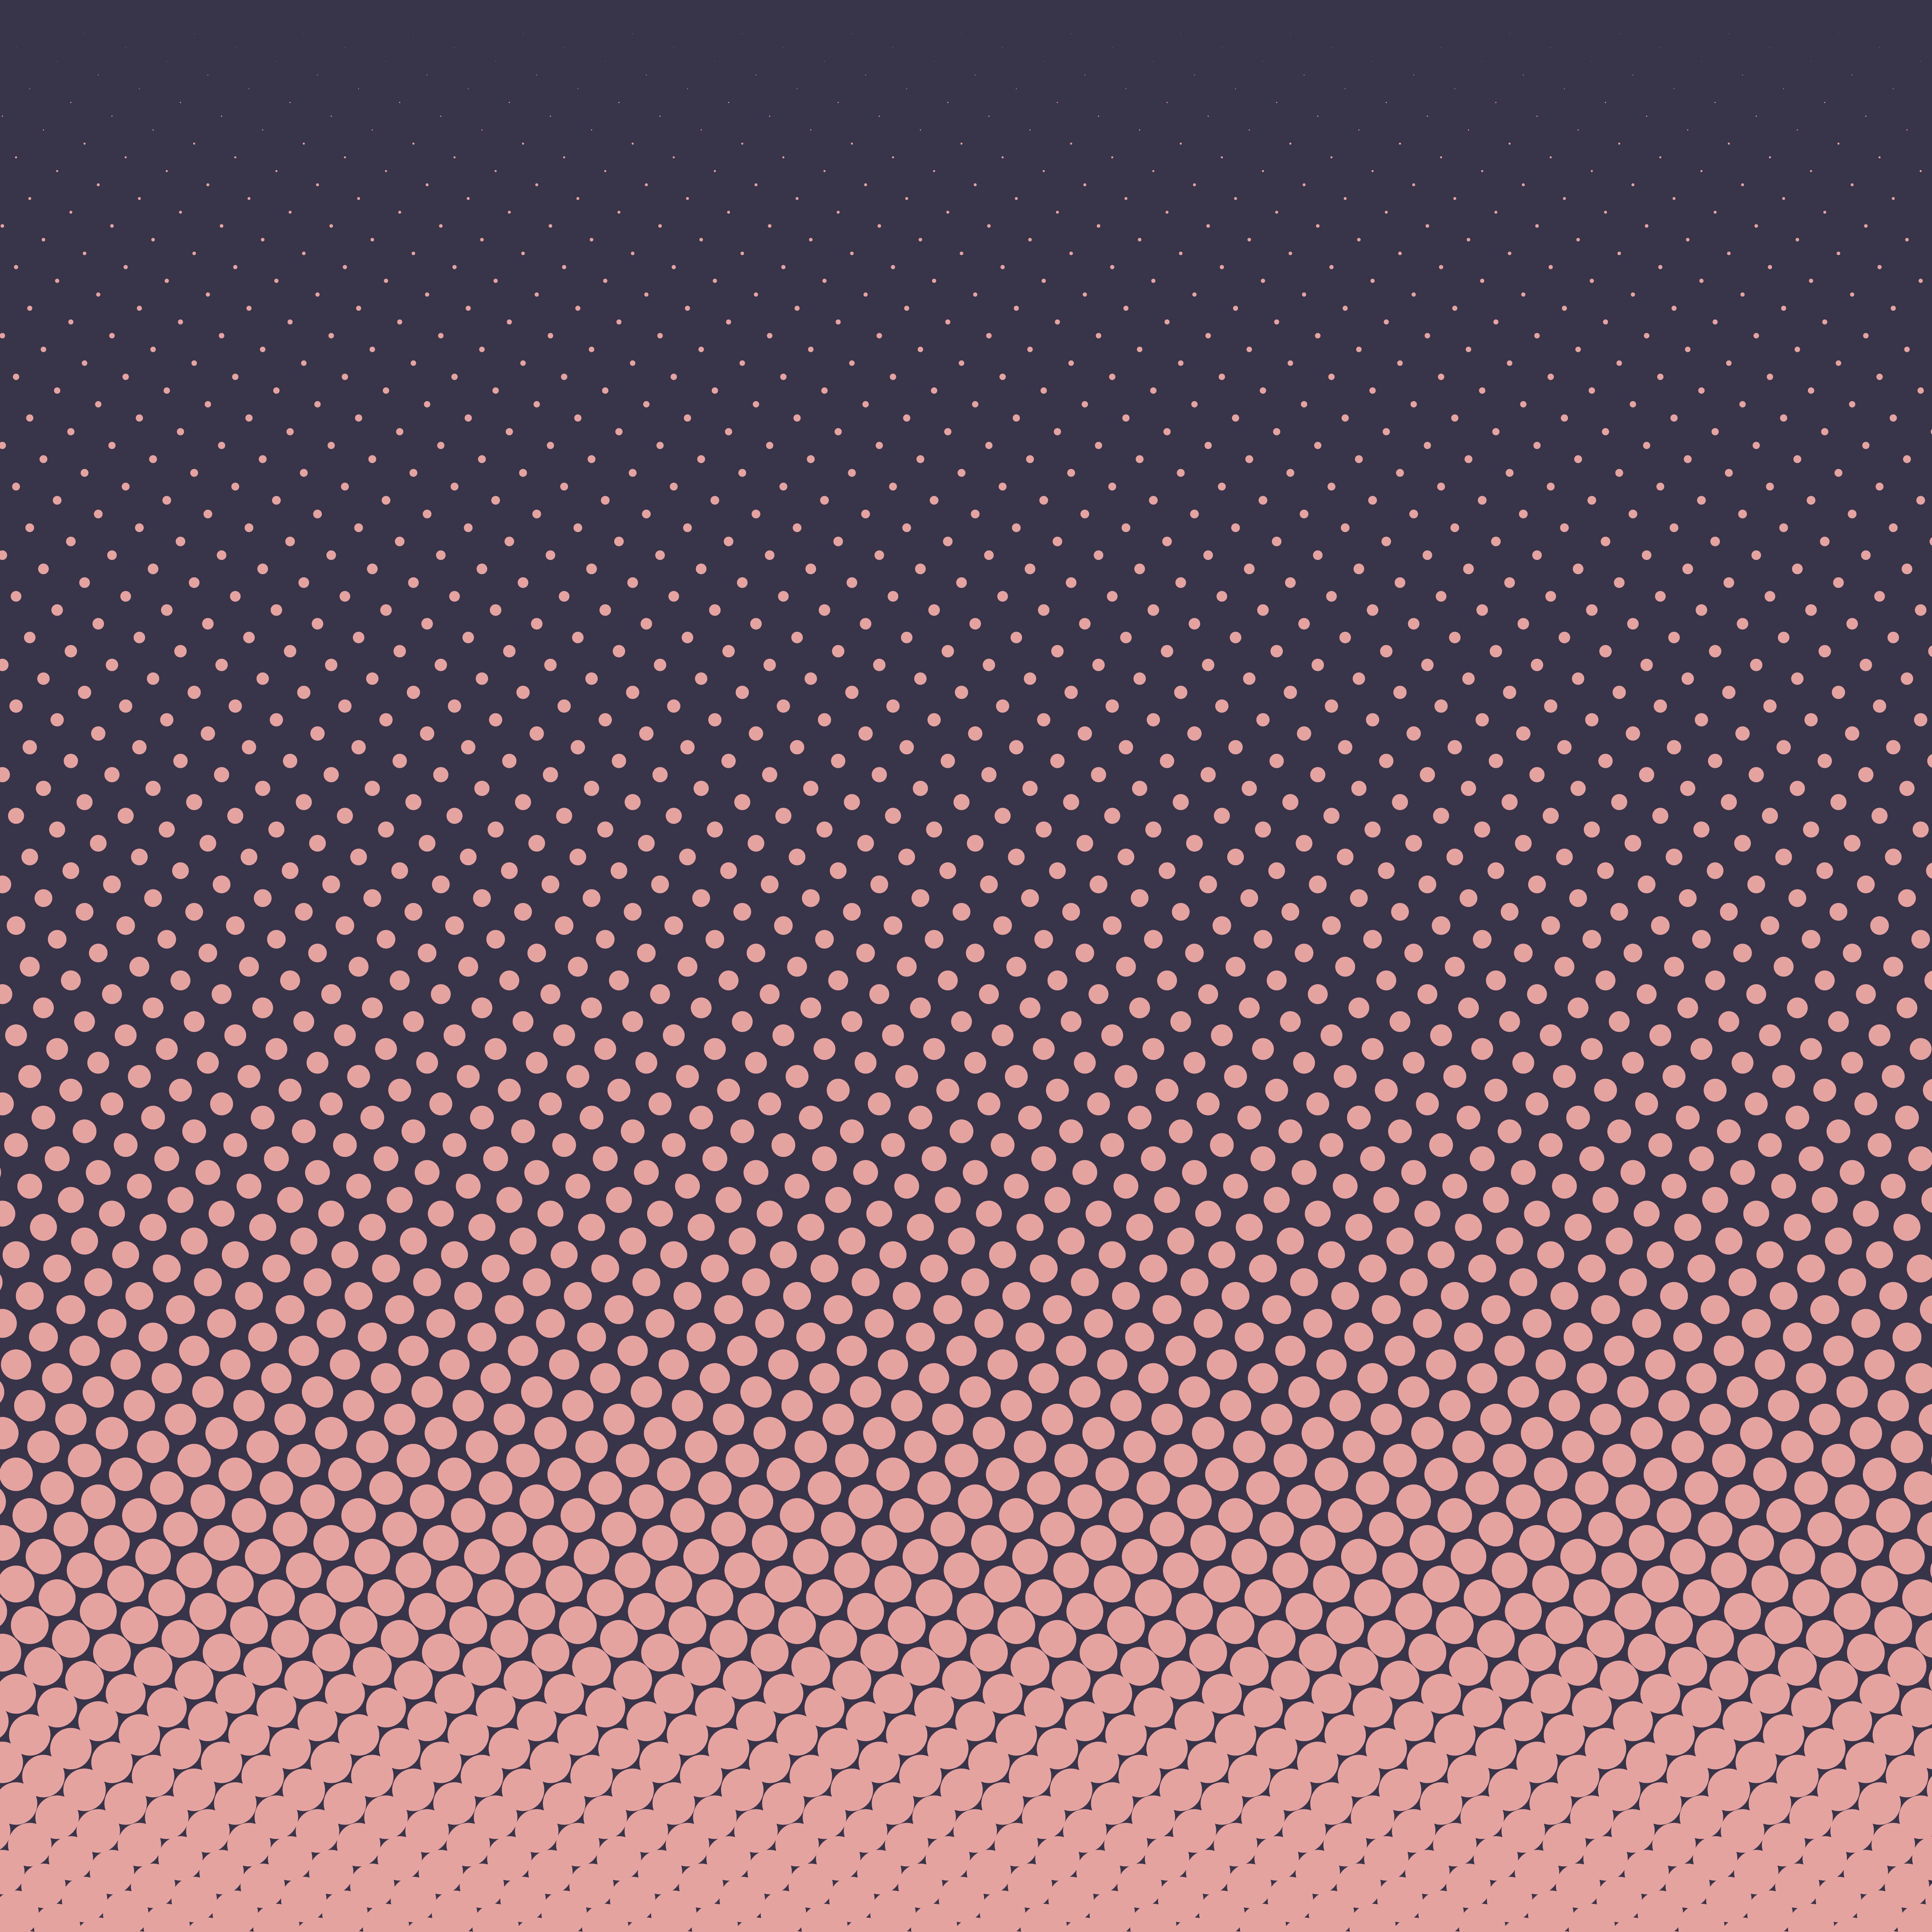 General 5000x5000 texture minimalism dots abstract